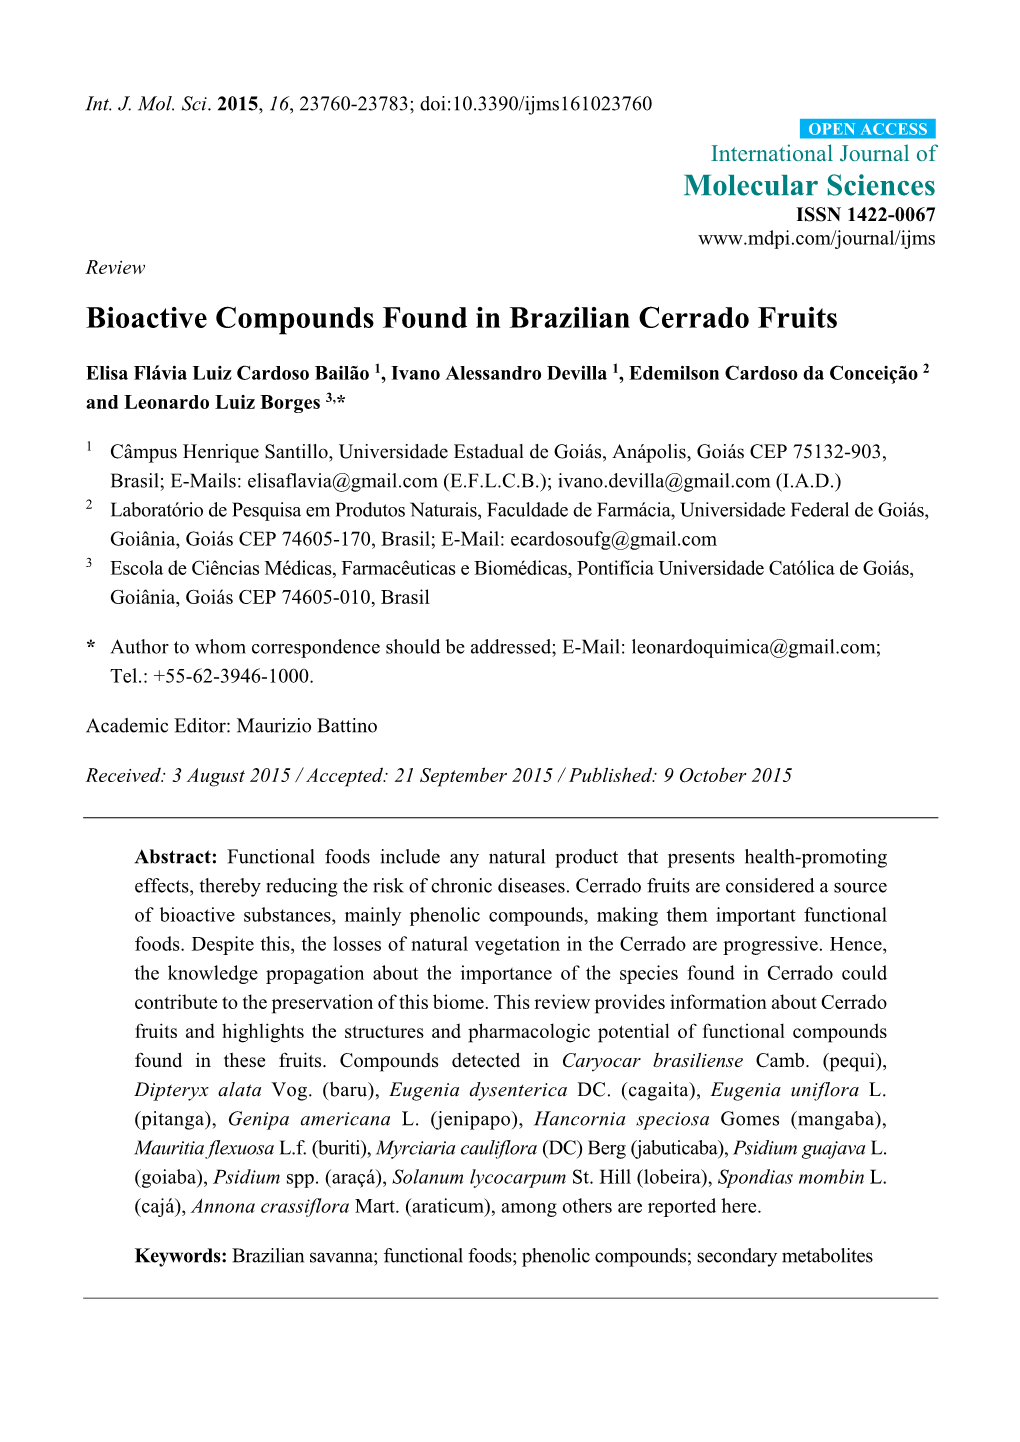 Bioactive Compounds Found in Brazilian Cerrado Fruits